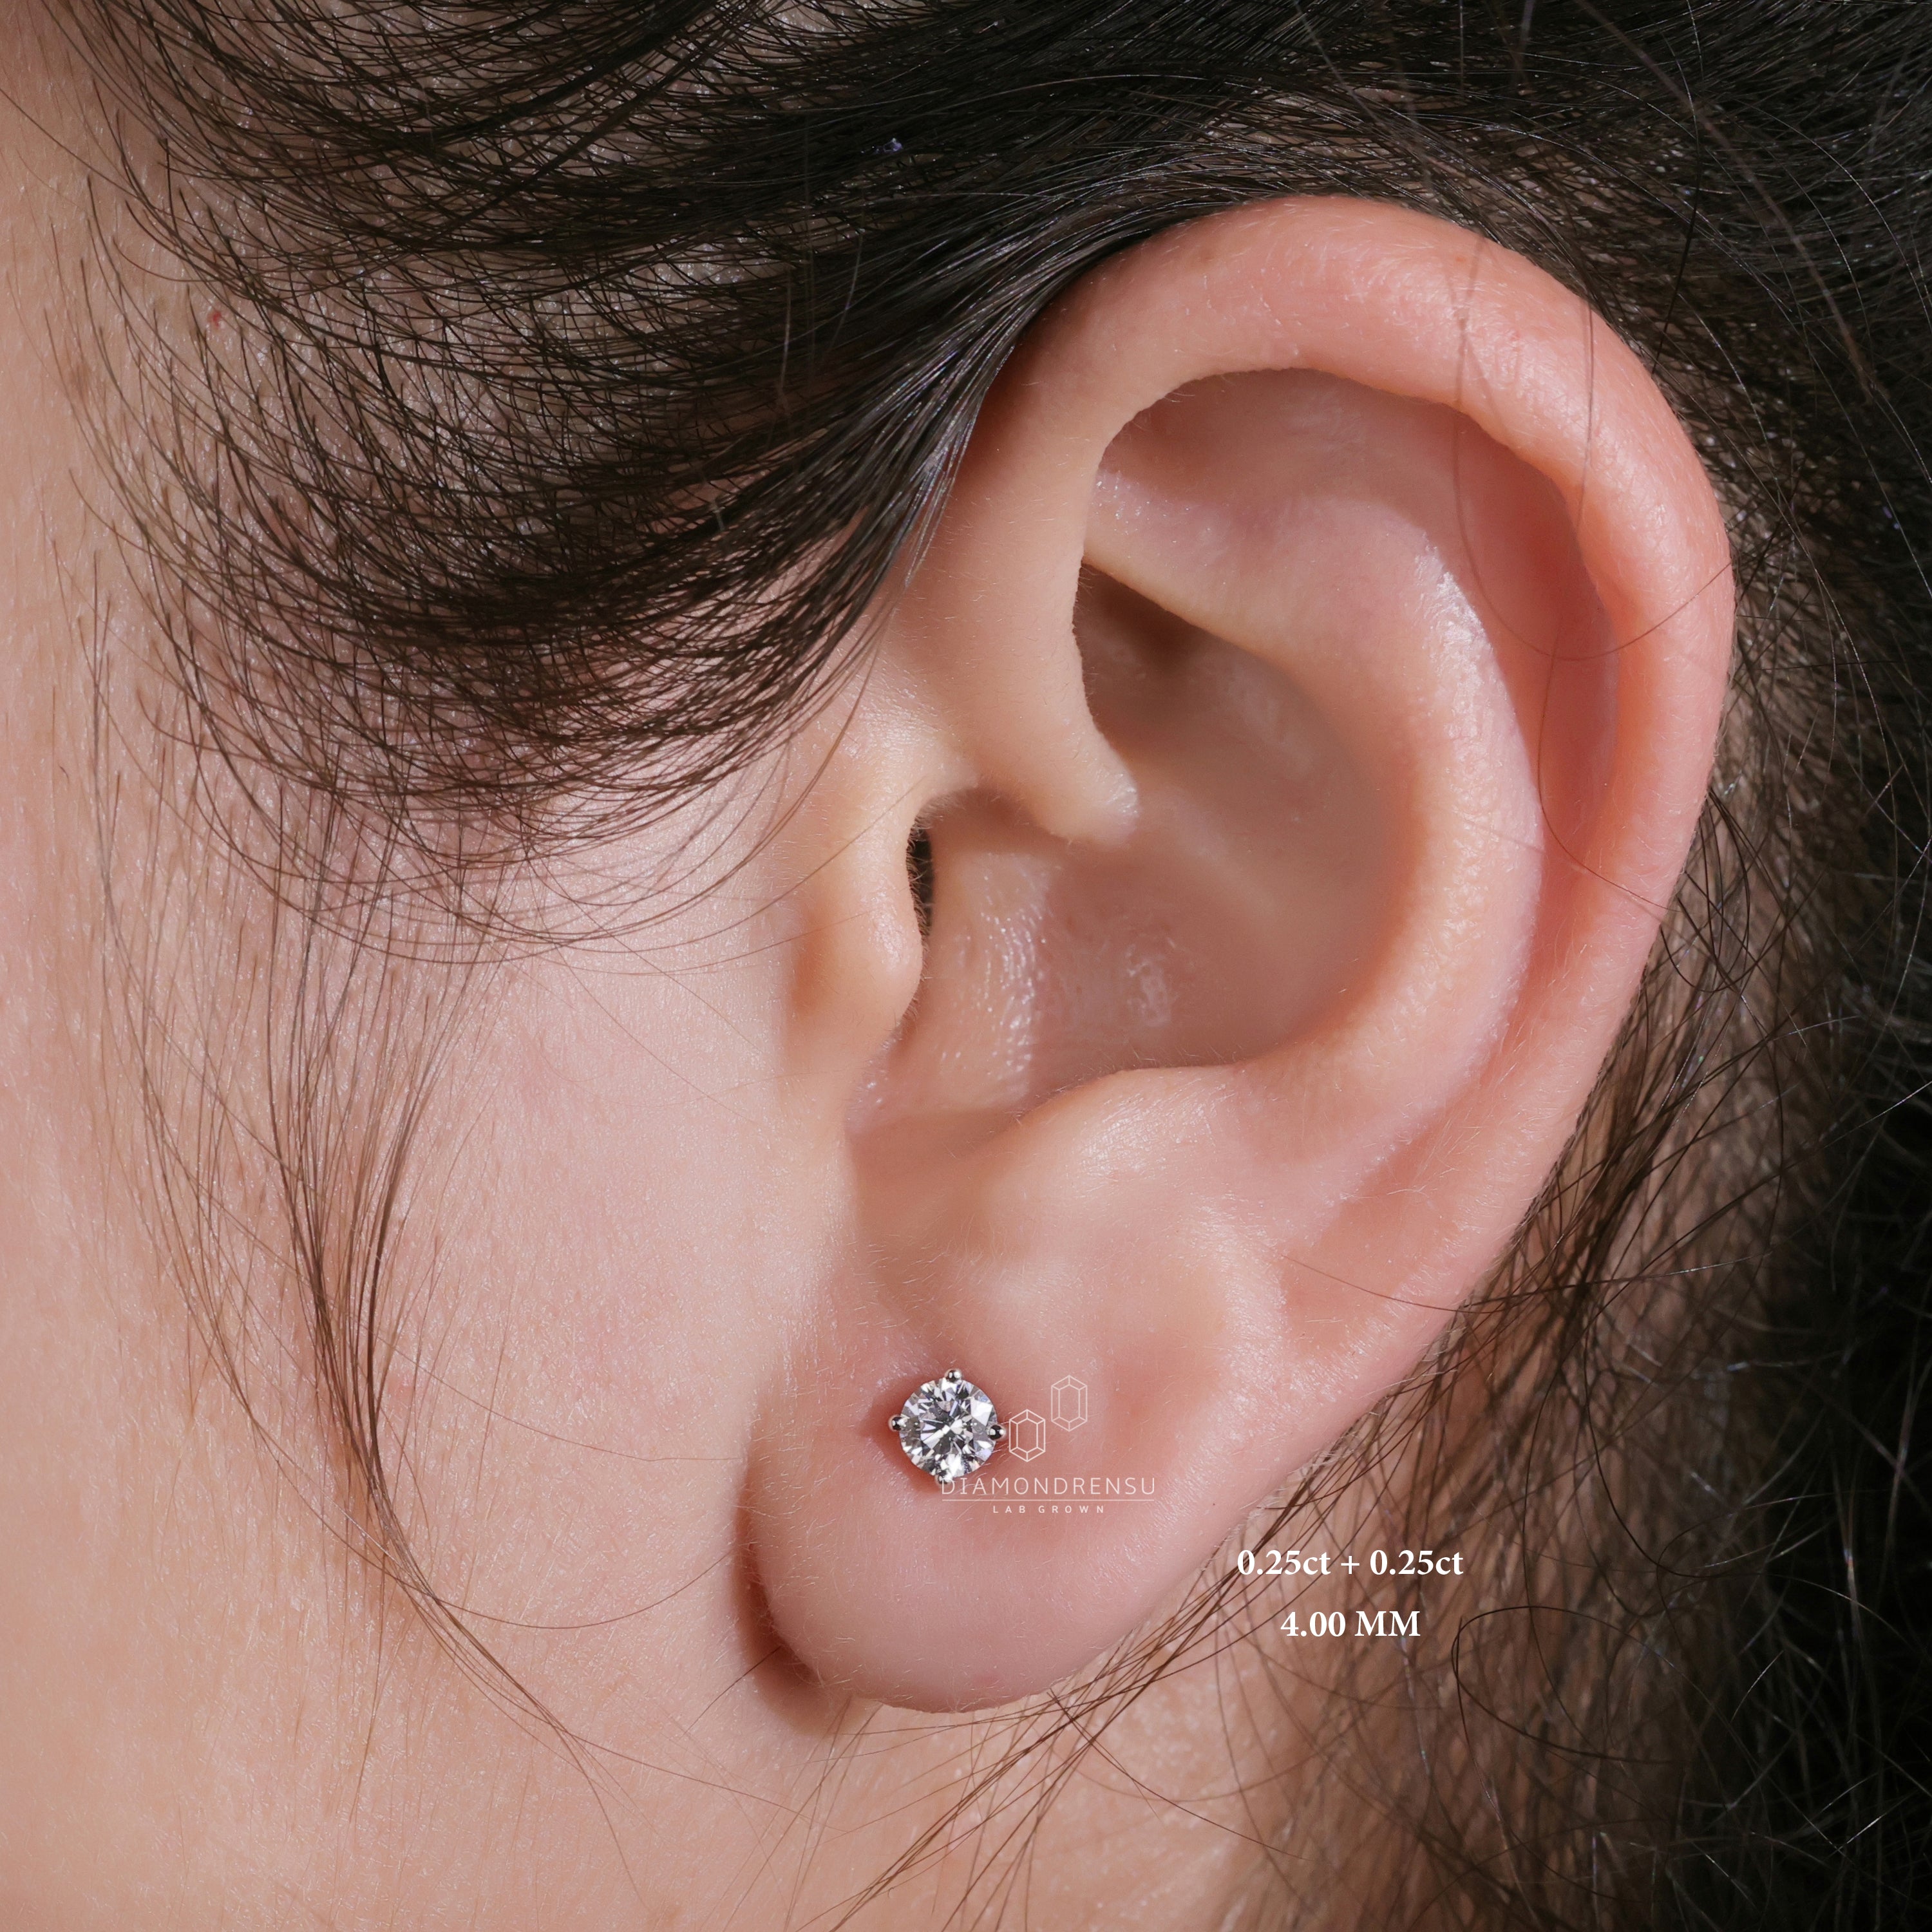 Woman wearing lab grown diamond stud earrings, close-up on her ear.